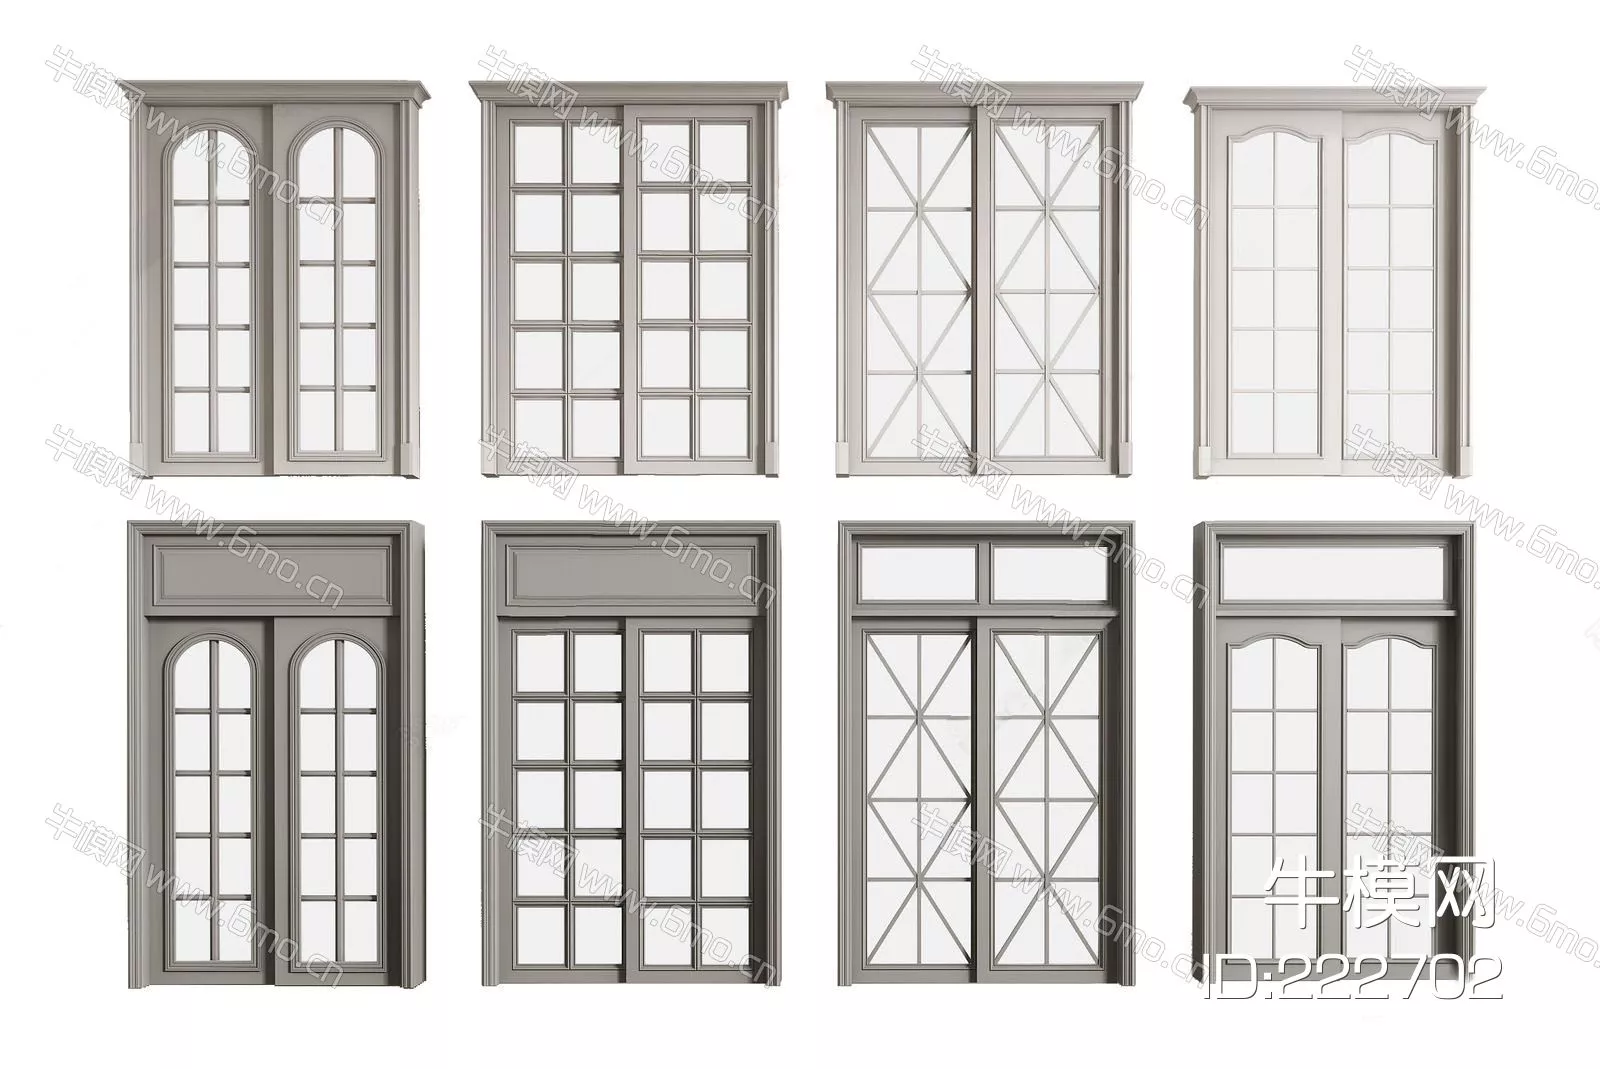 MODERN DOOR AND WINDOWS - SKETCHUP 3D MODEL - ENSCAPE - 222702